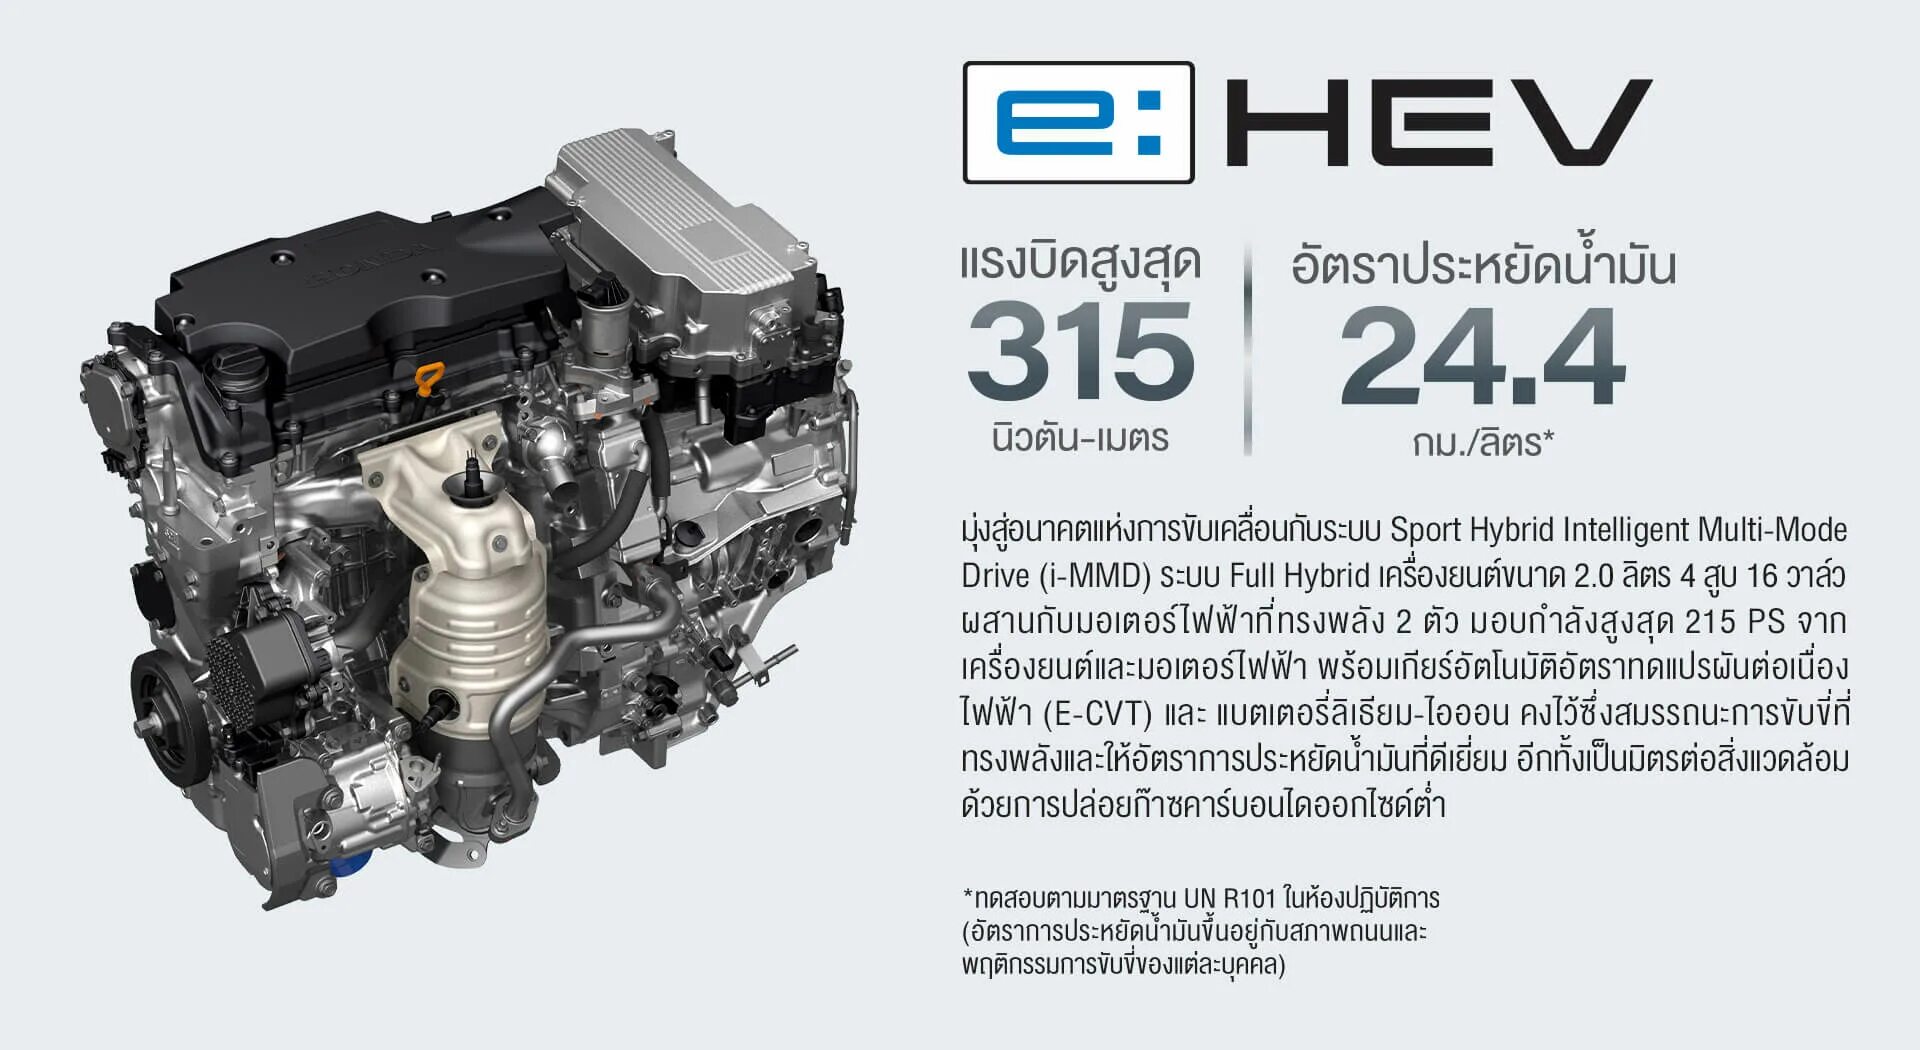 Sport Hybrid i-MMD. Honda Sport Hybrid i-MMD. Хонда гибрид i- MMD. Хонда гибрид Sport Hybrid i-DCD трансмиссия. Hybrid 1.49